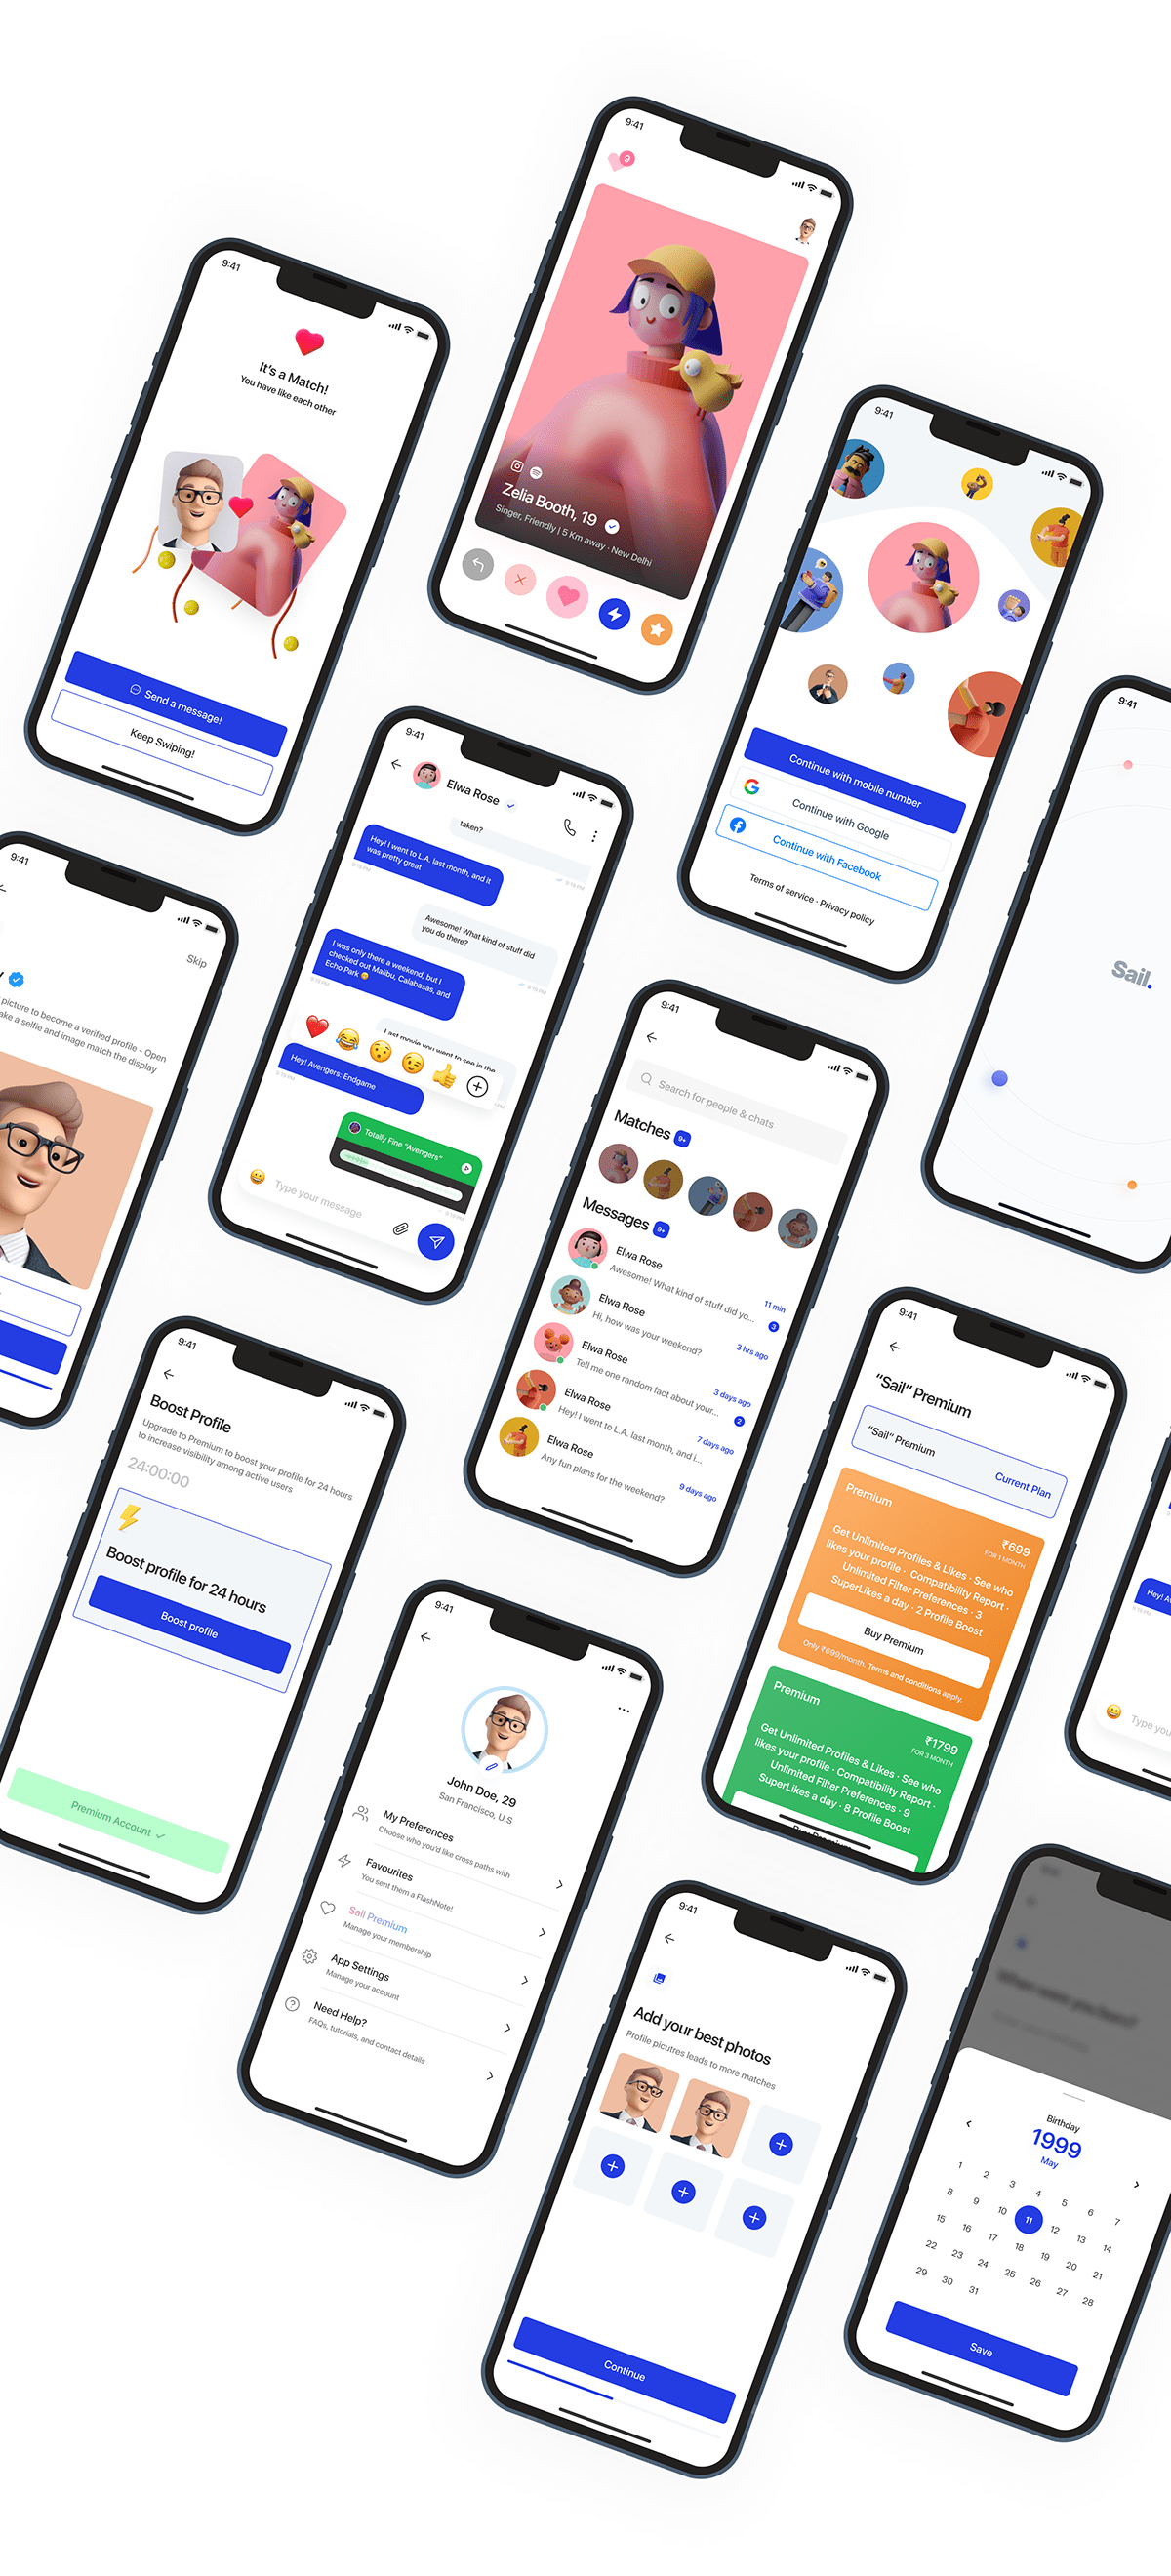 Sail - dating app template